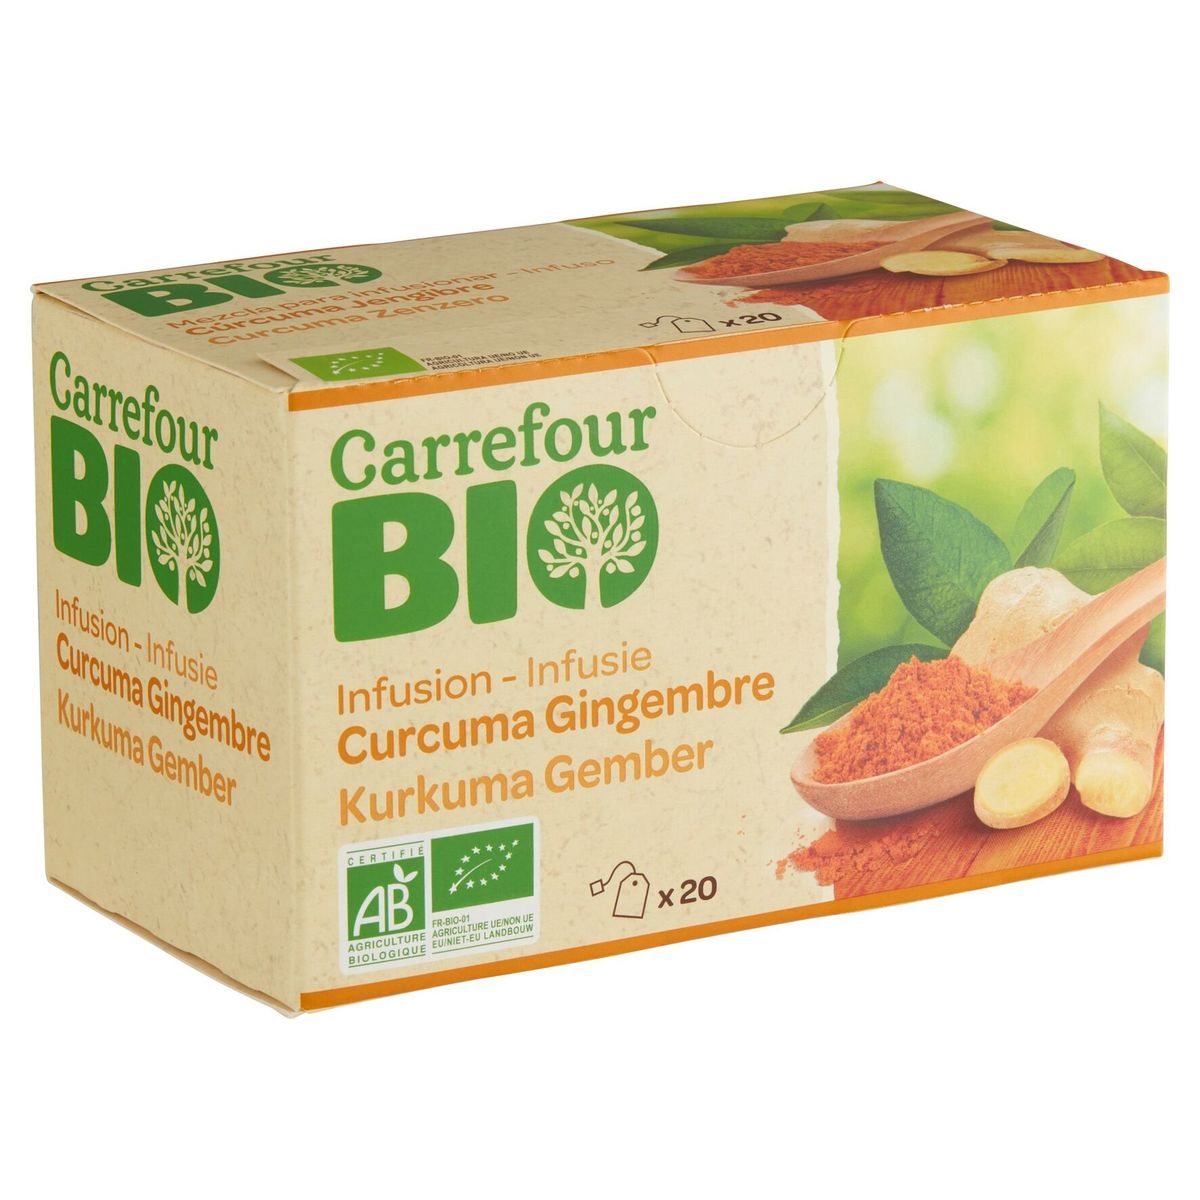 Carrefour Bio Infusie Kurkuma Gember 20 x 1.5 g